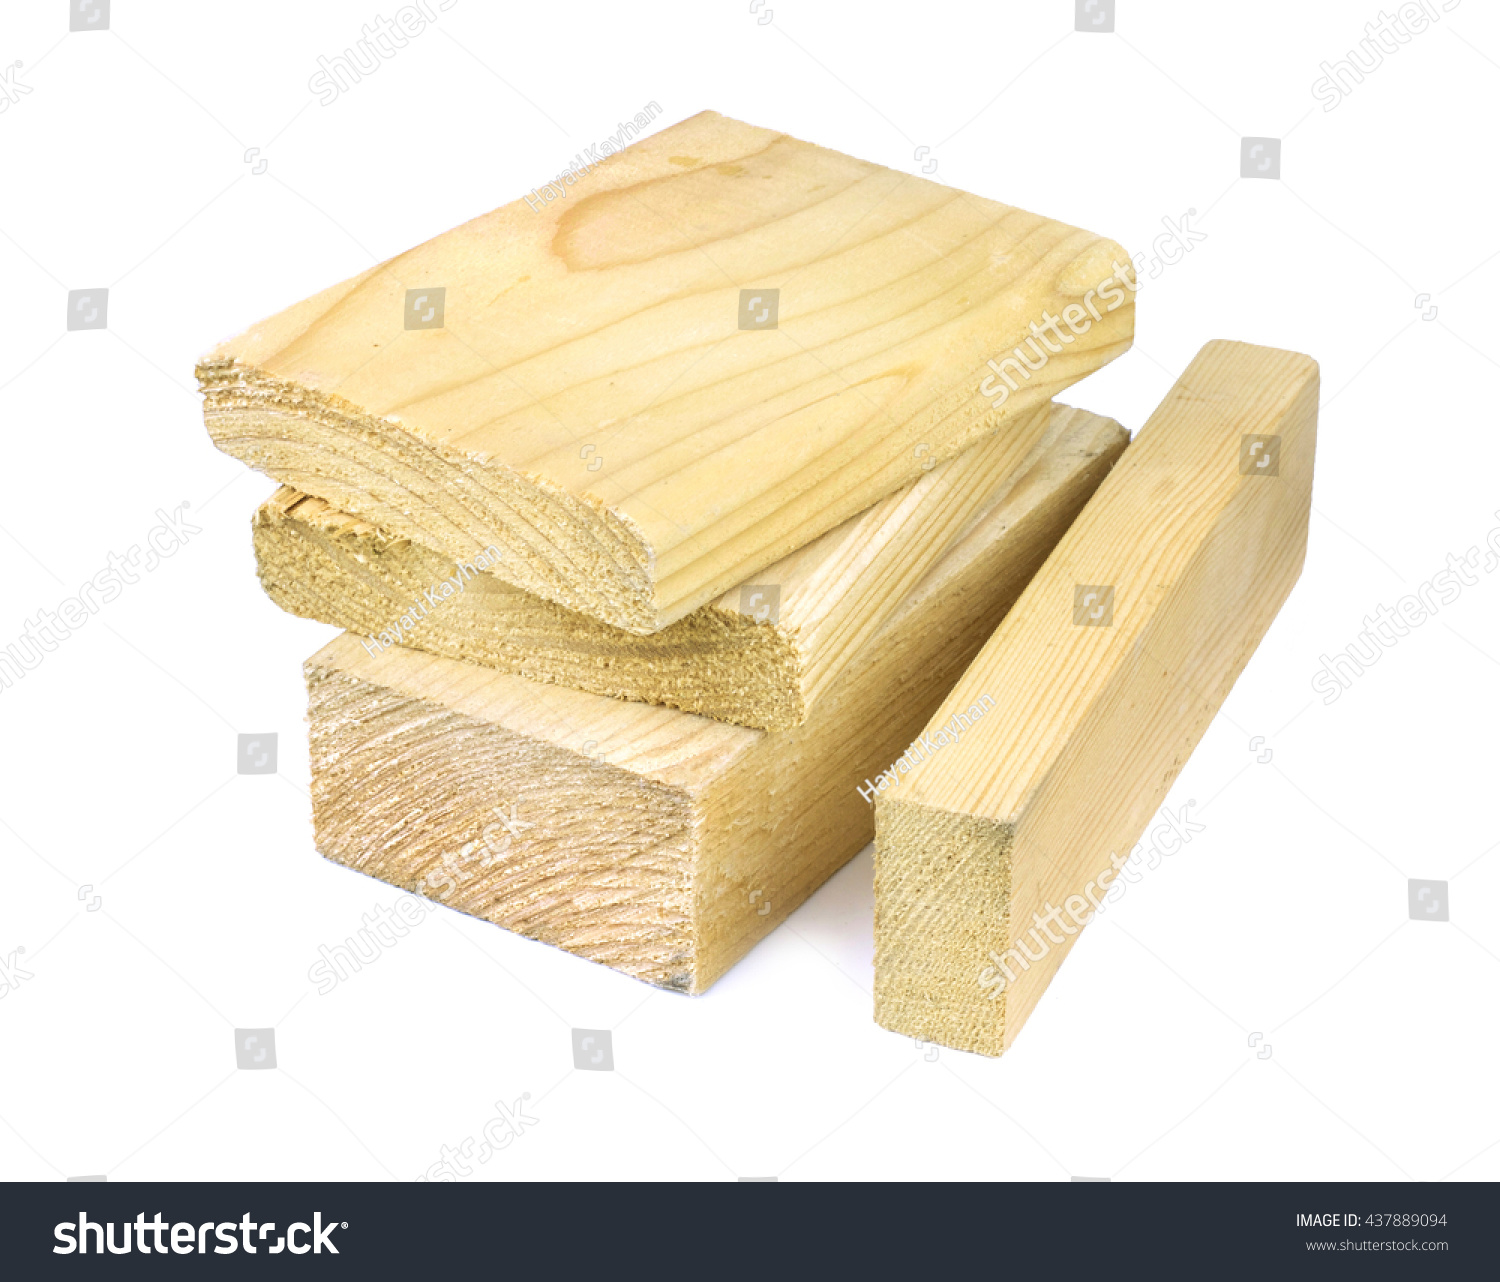  Wooden blocks on white background #437889094